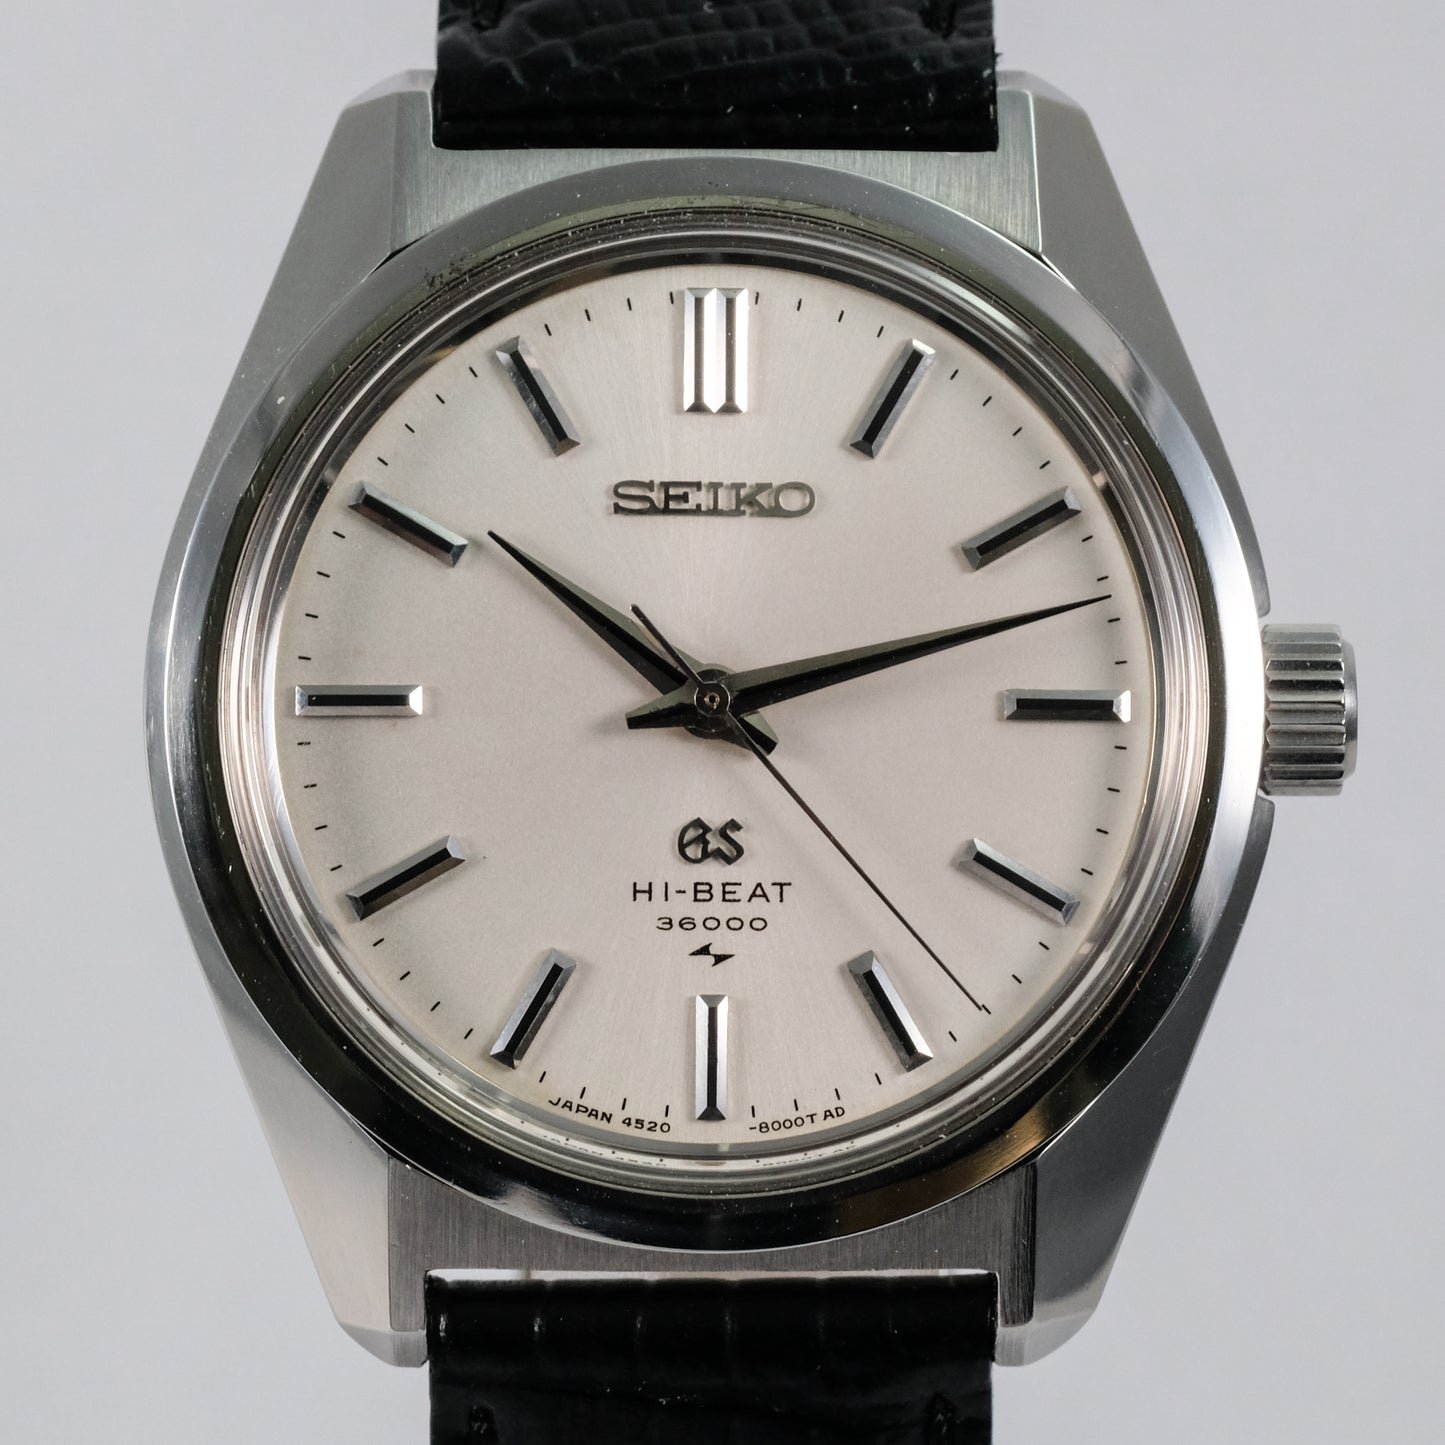 1968 Seiko GS 4520-8000